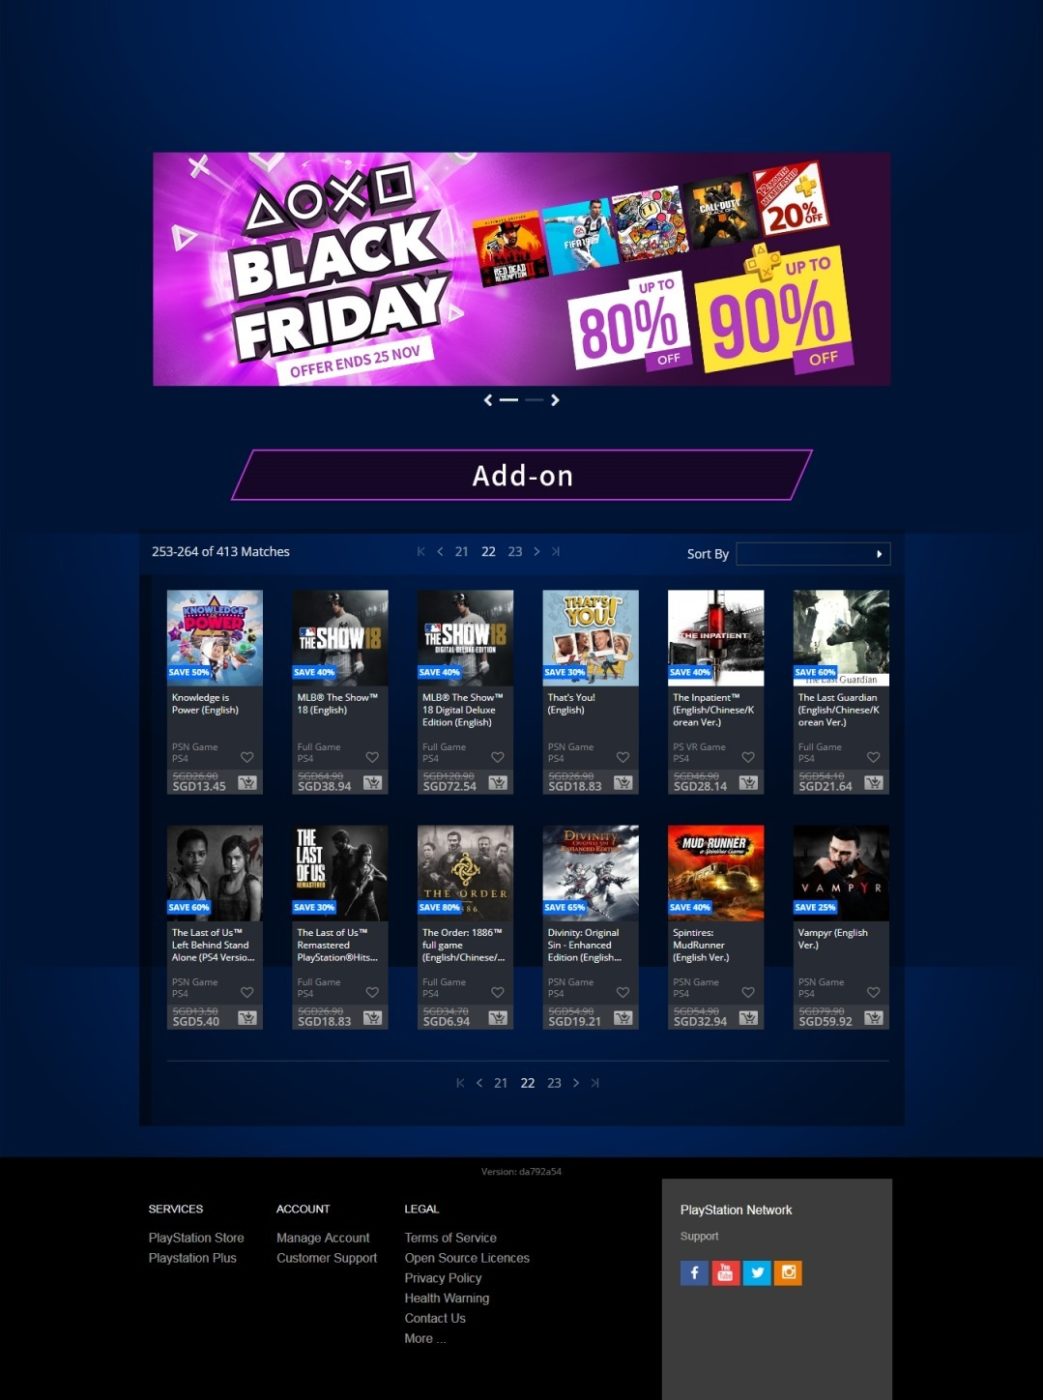 Black Friday Deals  PlayStation Store 